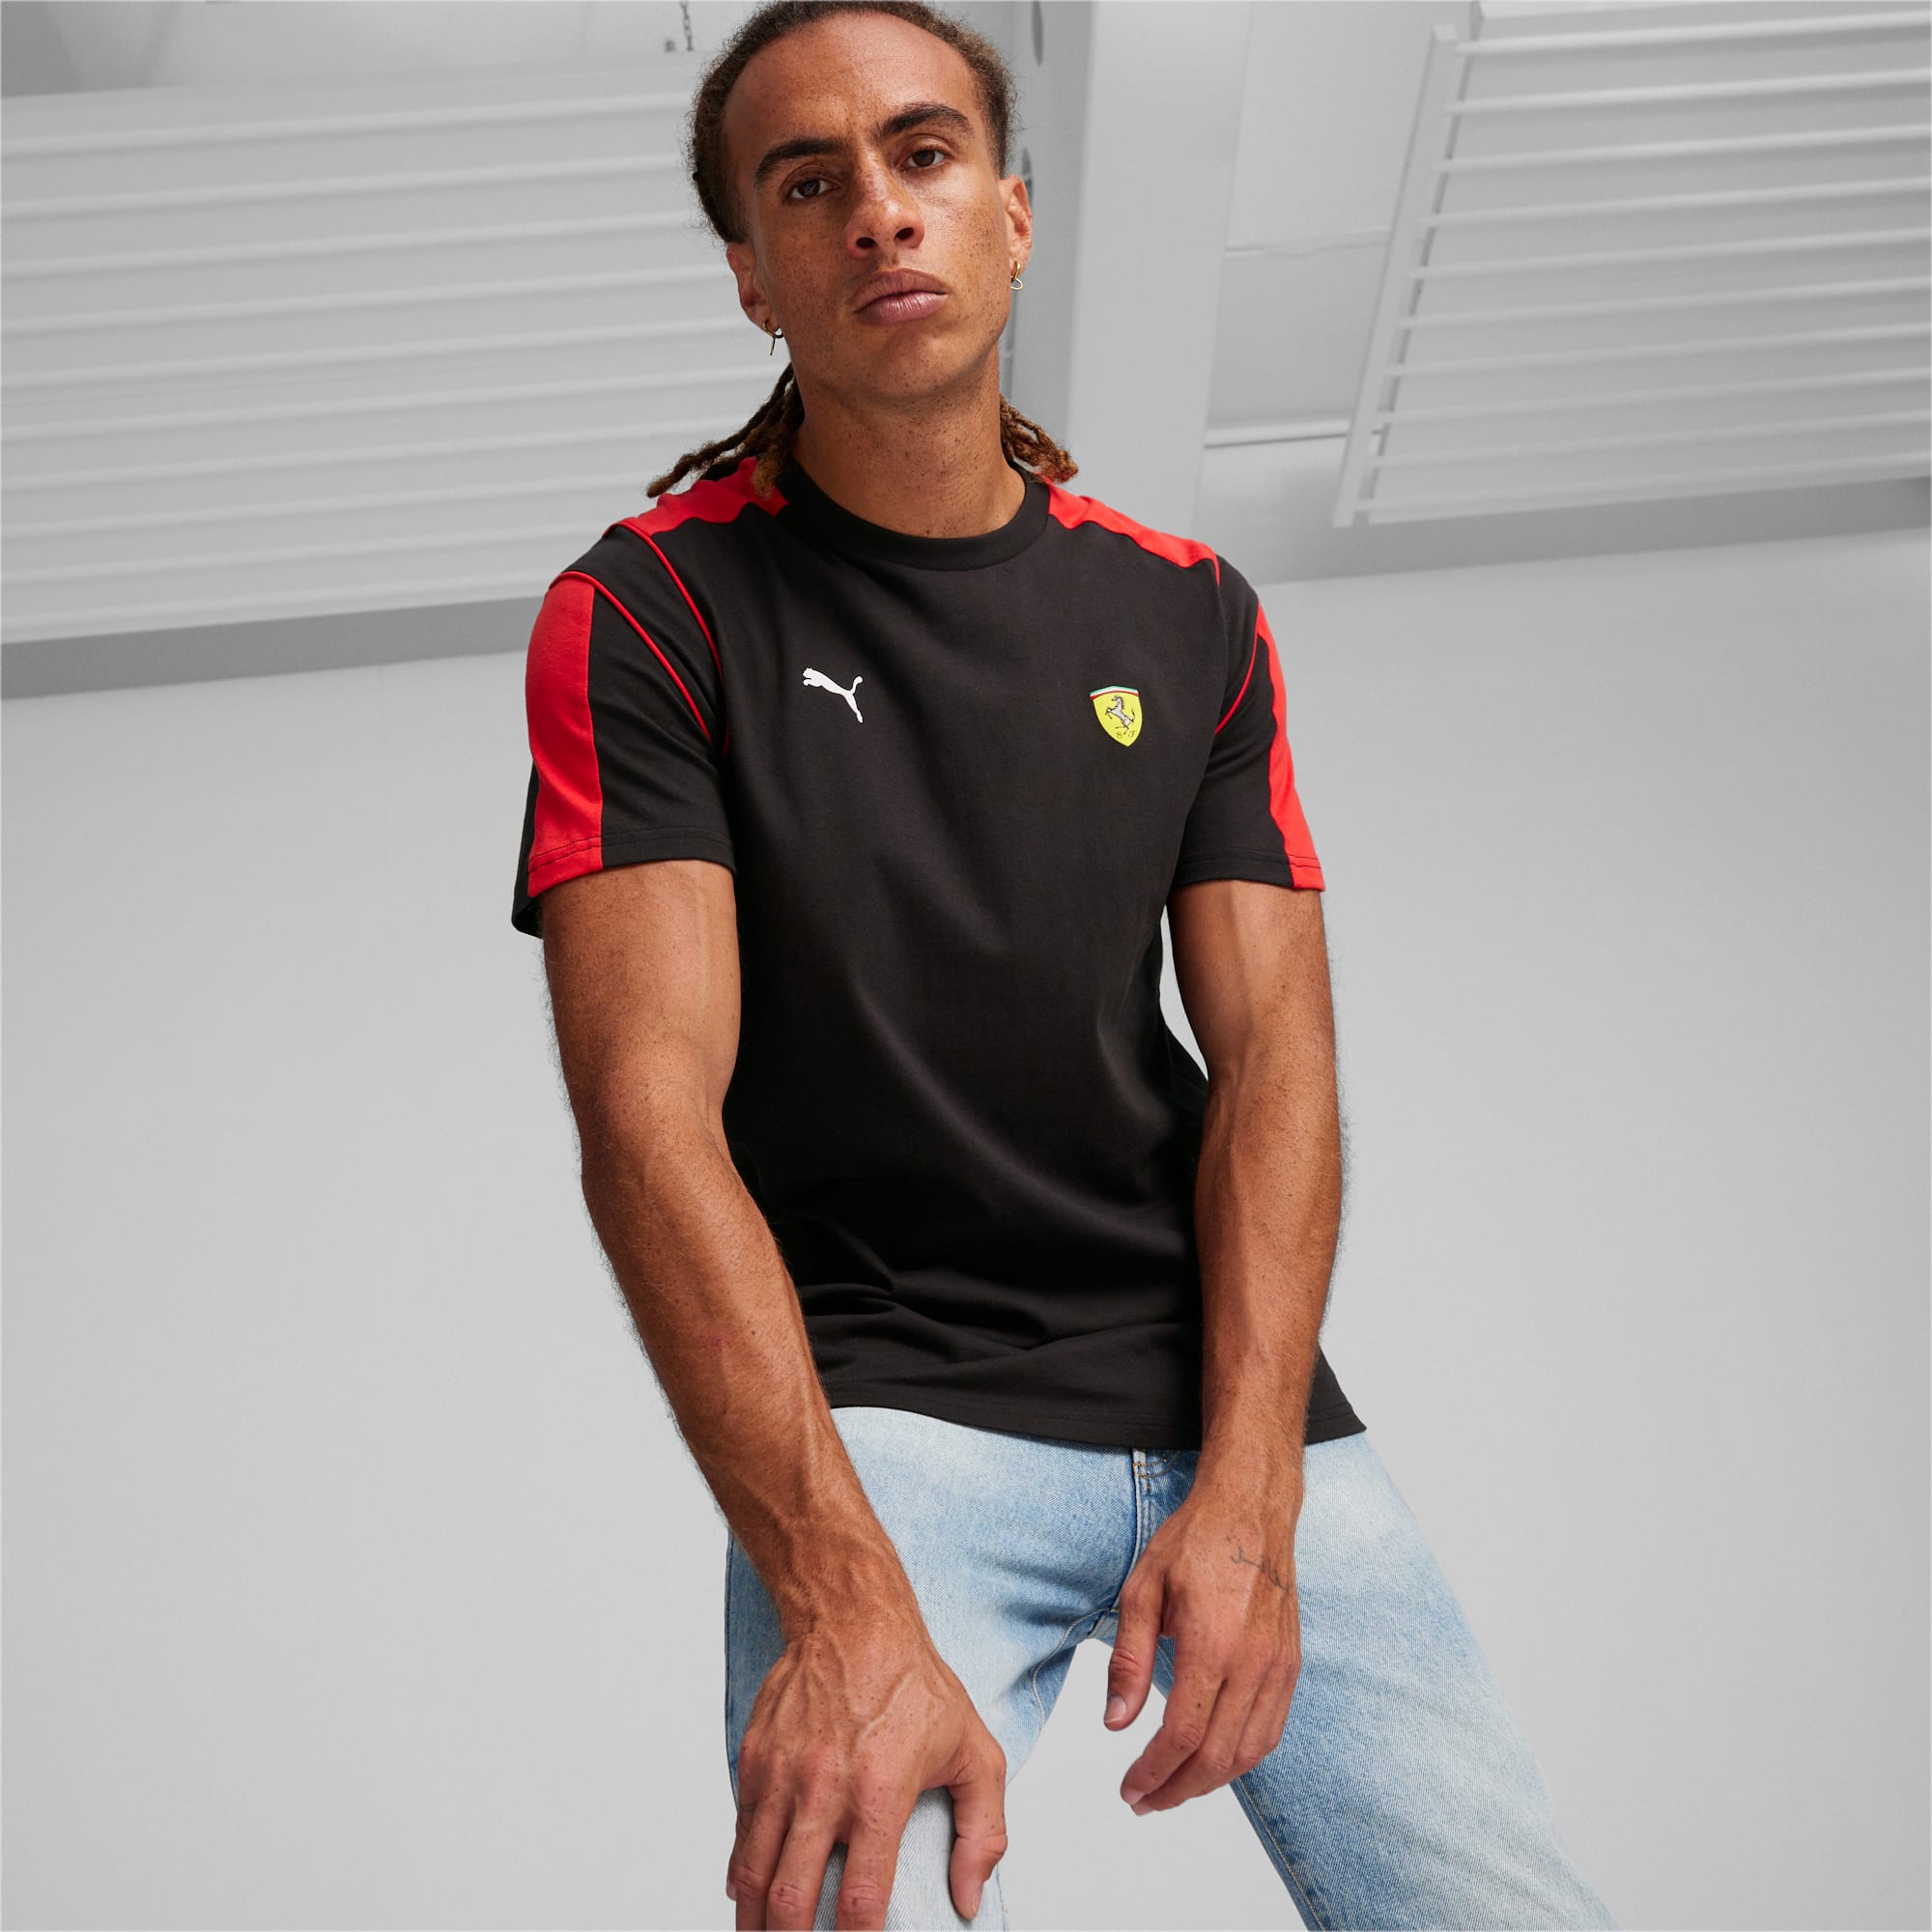 PUMA Scuderia Ferrari Race Mt7 Men's Motorsport T-Shirt, Black, Size XS, Clothing